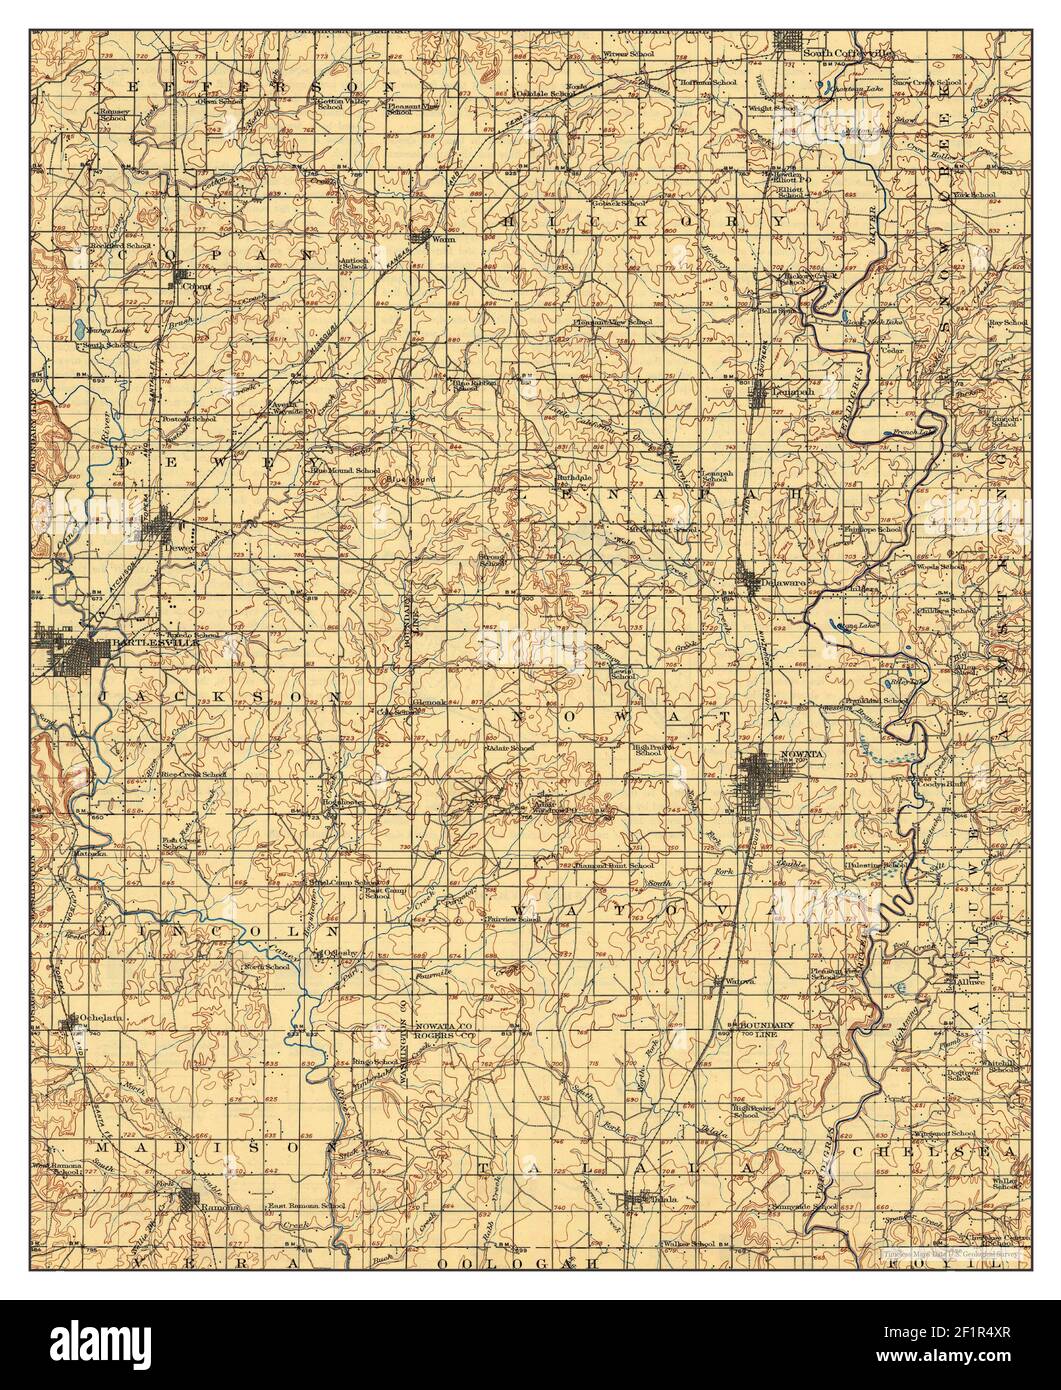 Nowata, Oklahoma, map 1914, 1:125000, United States of America by Timeless Maps, data U.S. Geological Survey Stock Photo